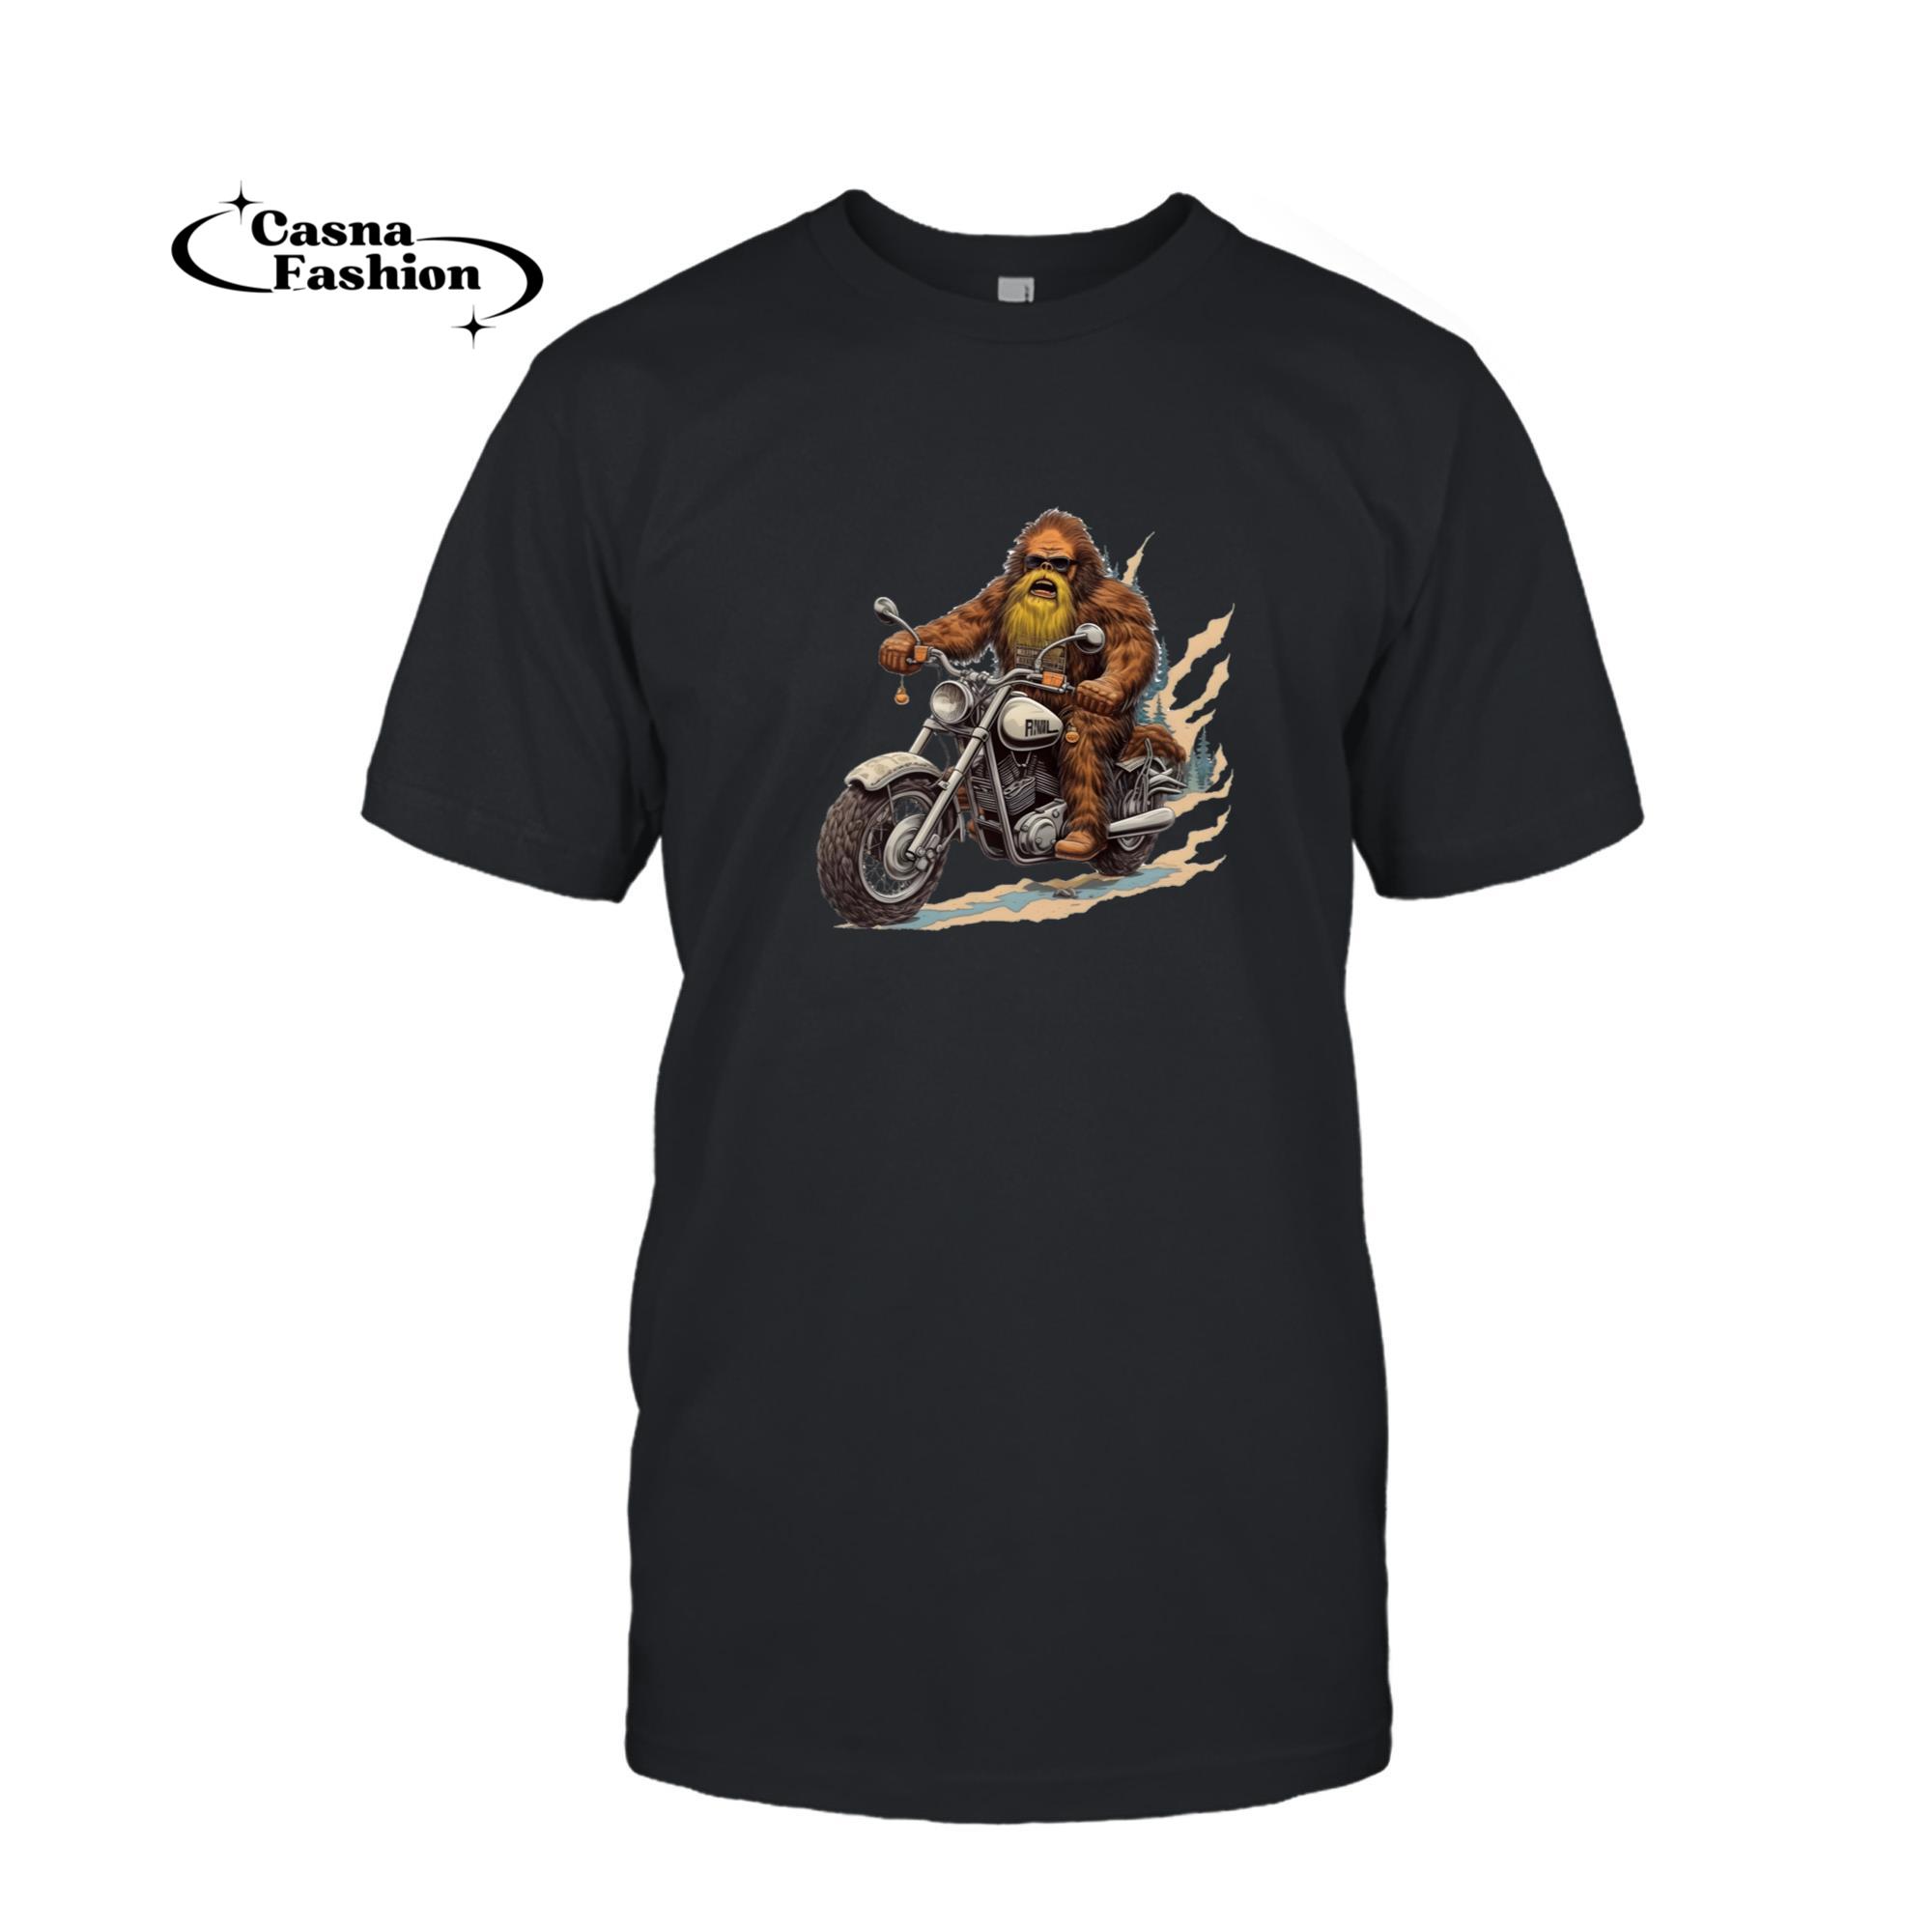 casnafashion_T-shirt_Funny Bigfoot Biker _ Sasquatch Riding a Motorcycle Pullover Hoodie_T-shirt_Black